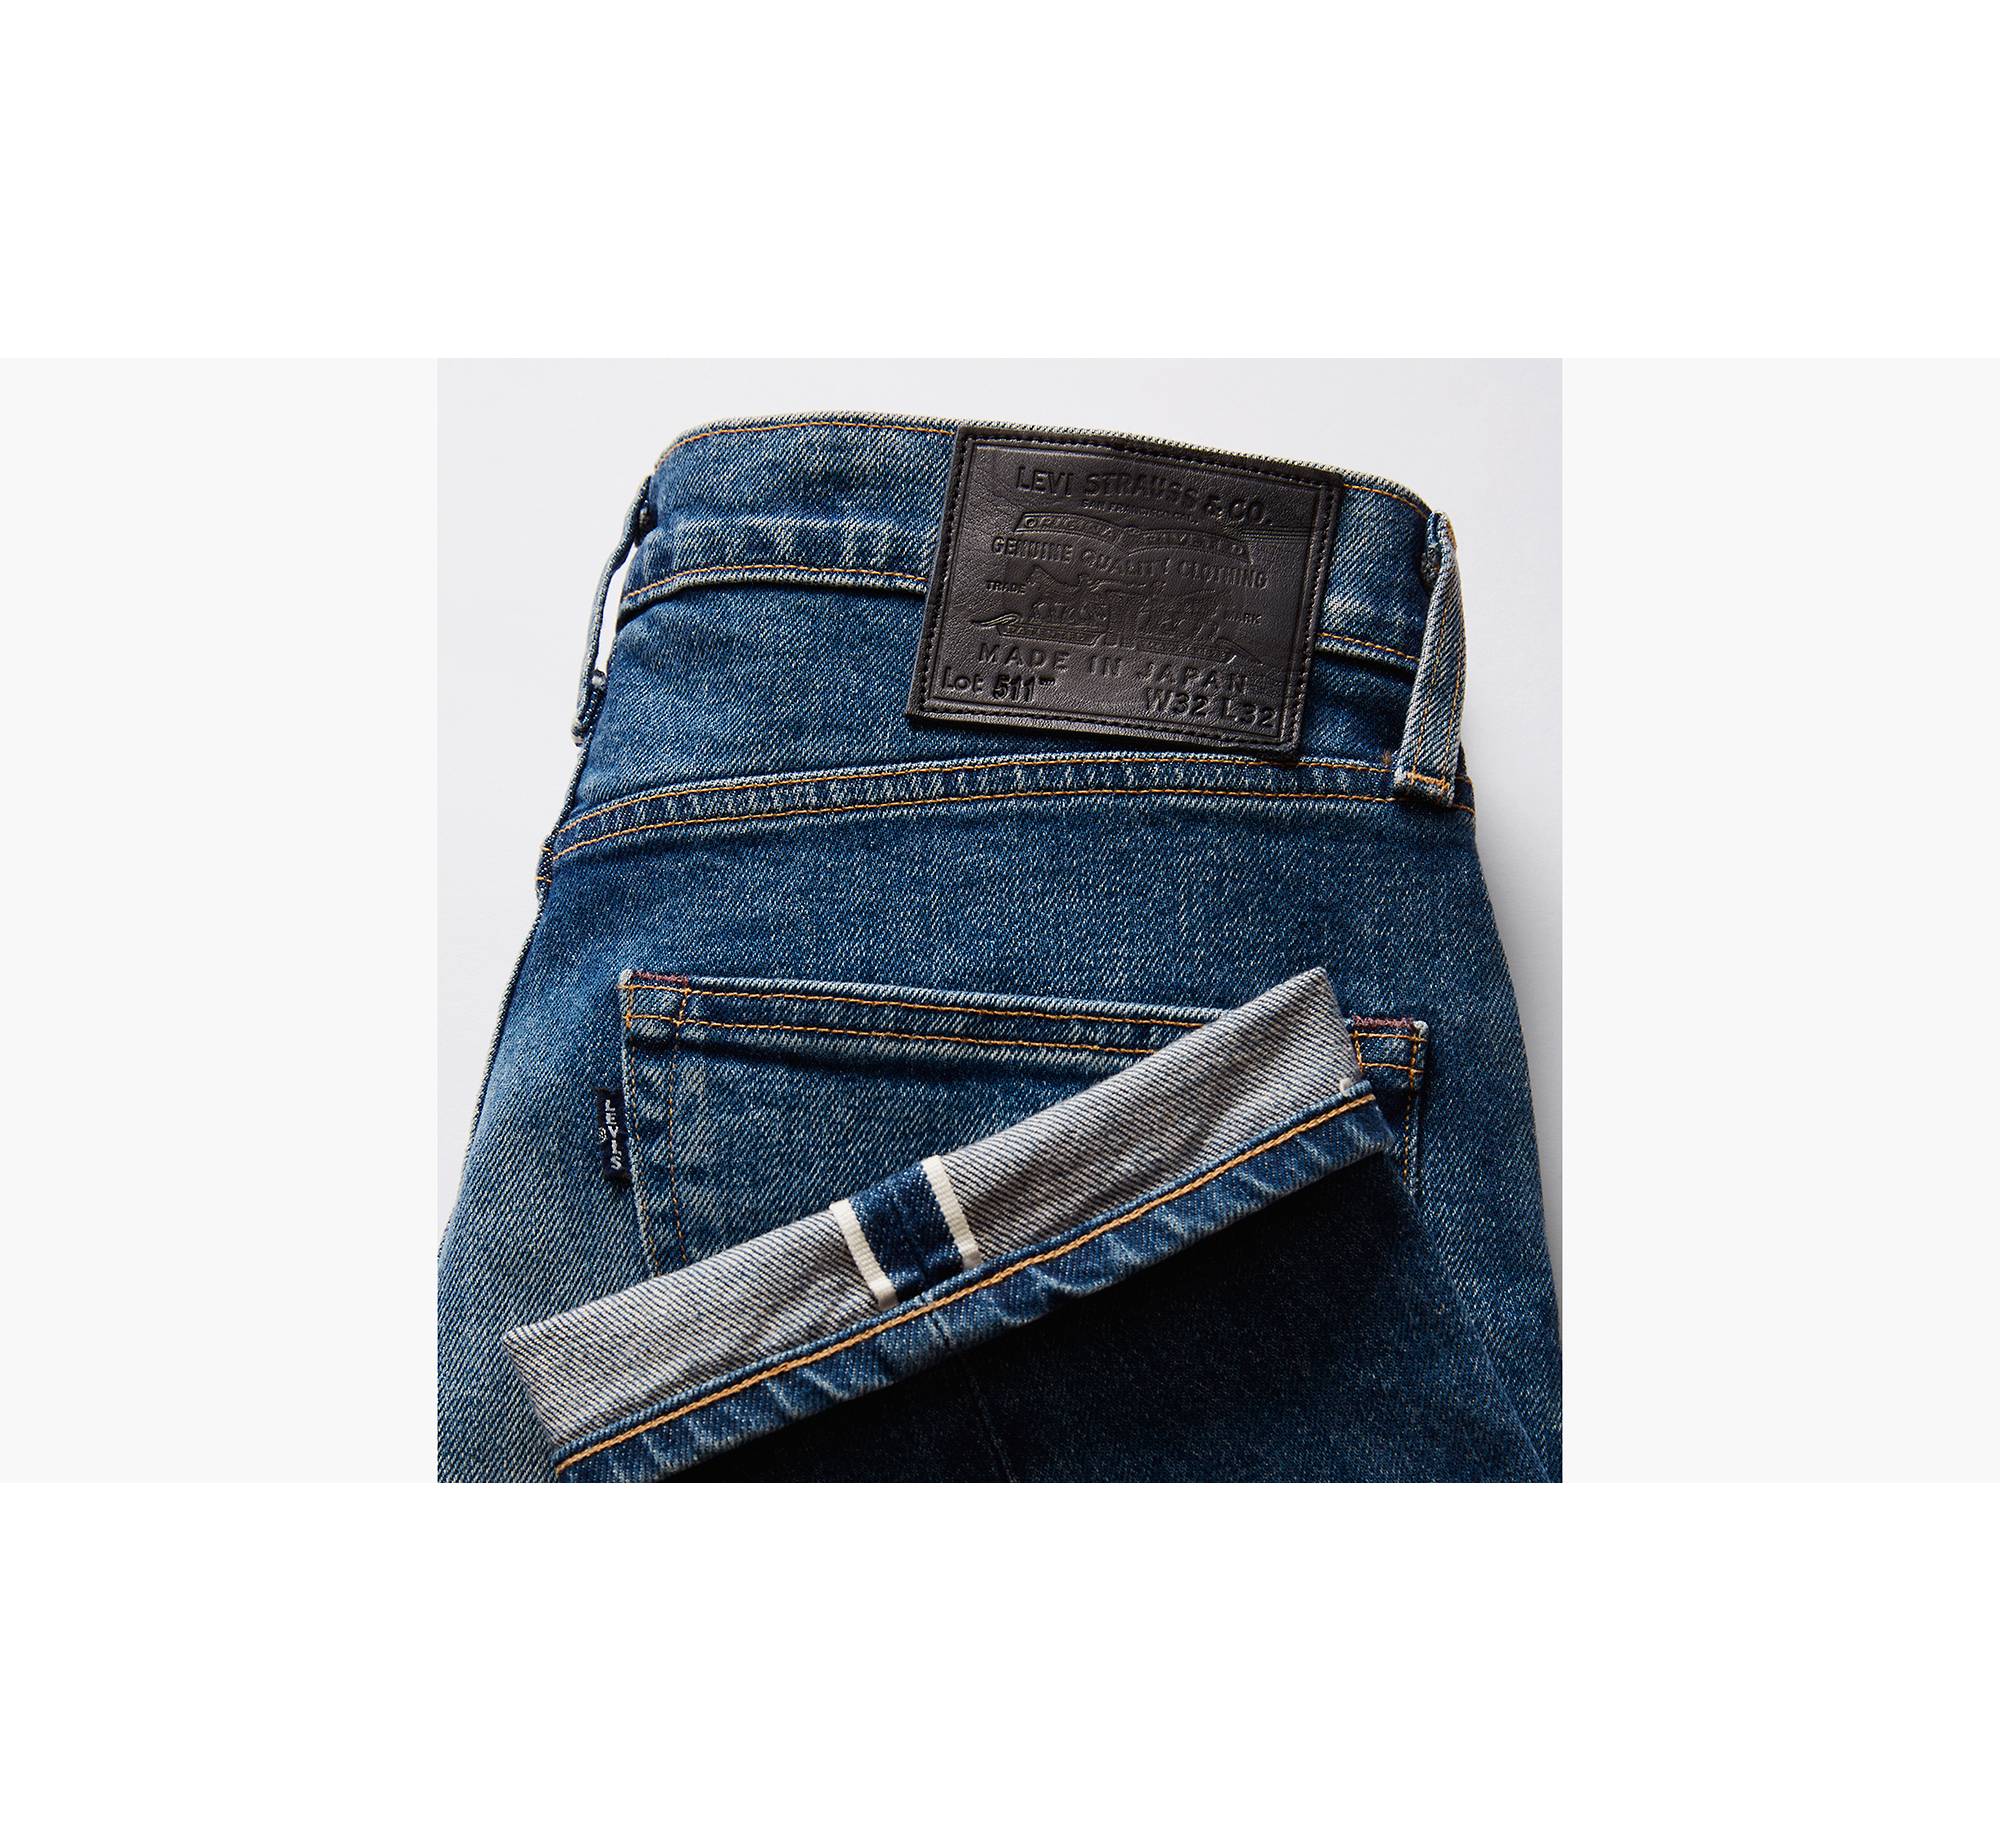 Made In Japan 511™ Slim Fit Selvedge Men's Jeans - Medium Wash 